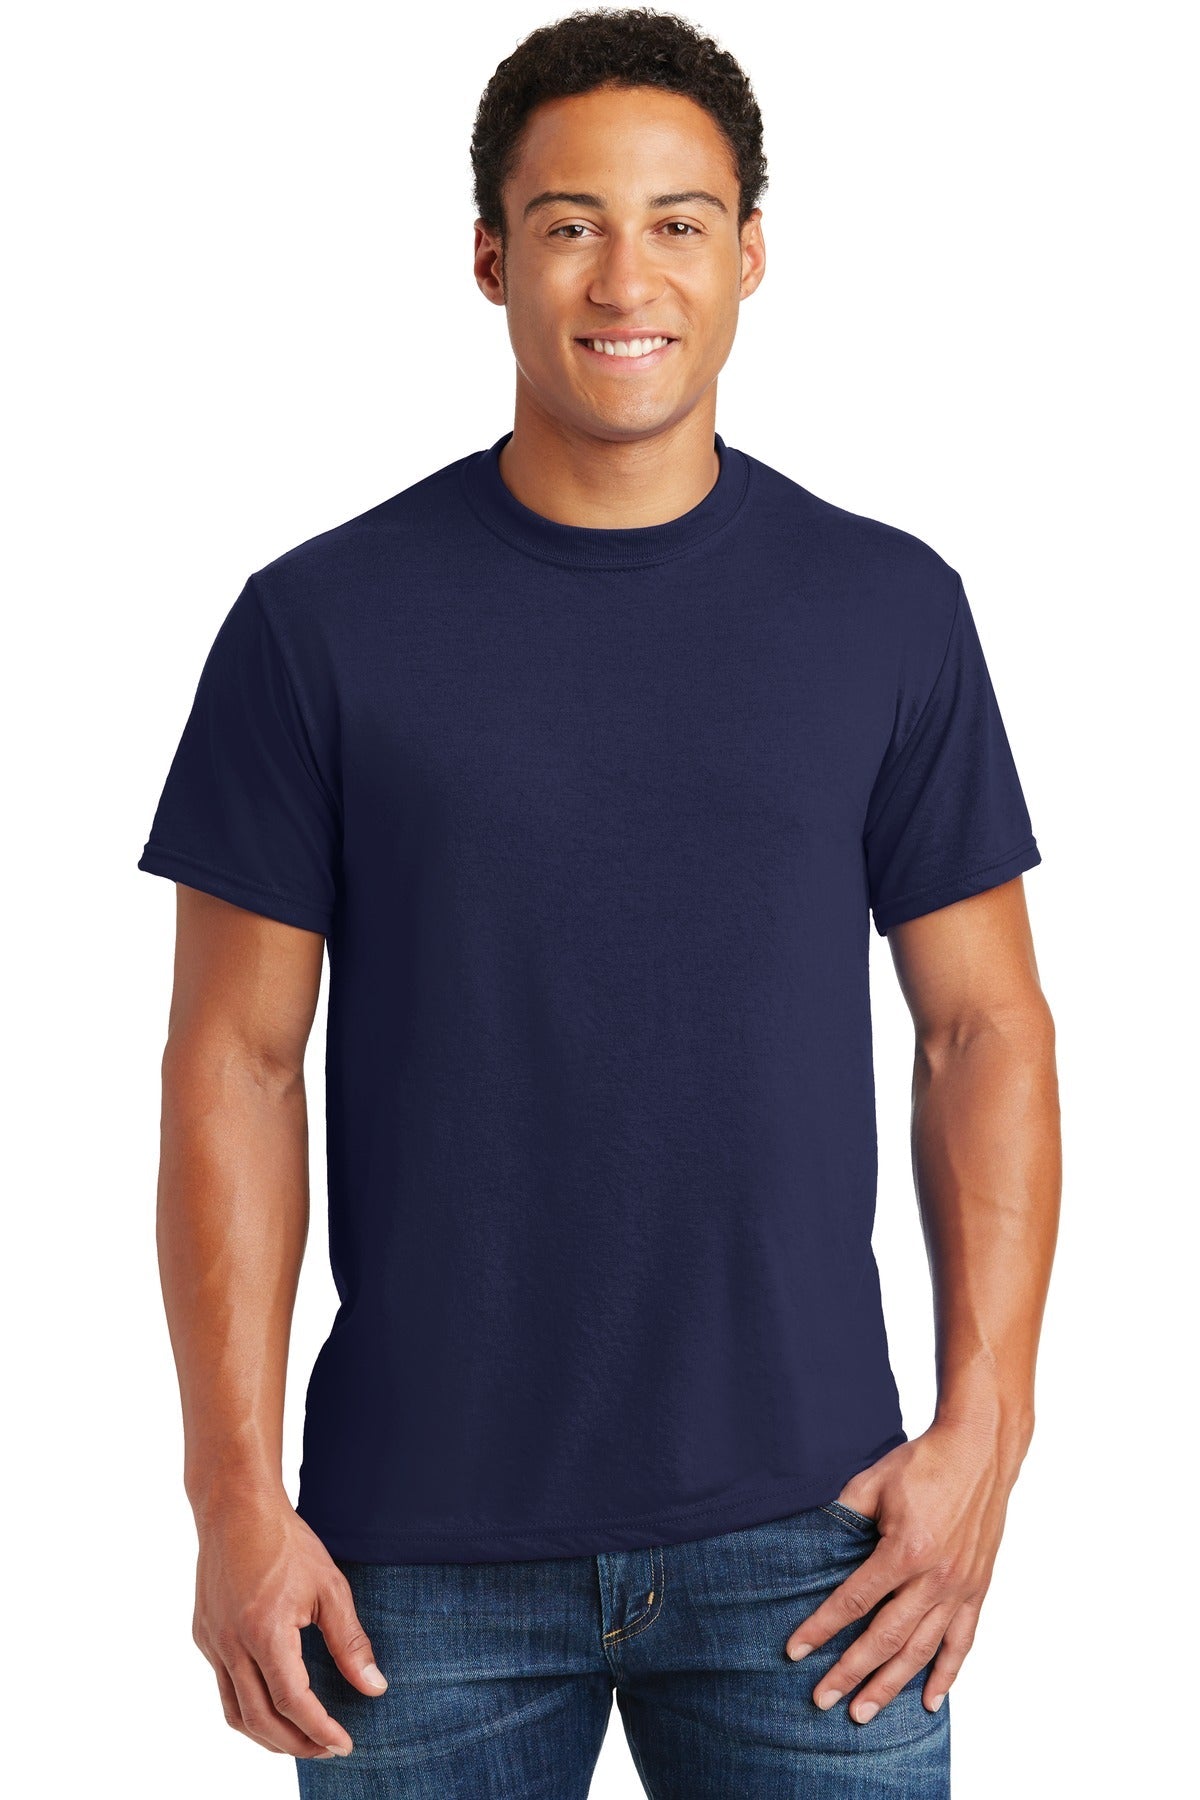 JERZEES® Dri-Power® 100% Polyester T-Shirt. 21M - DFW Impression